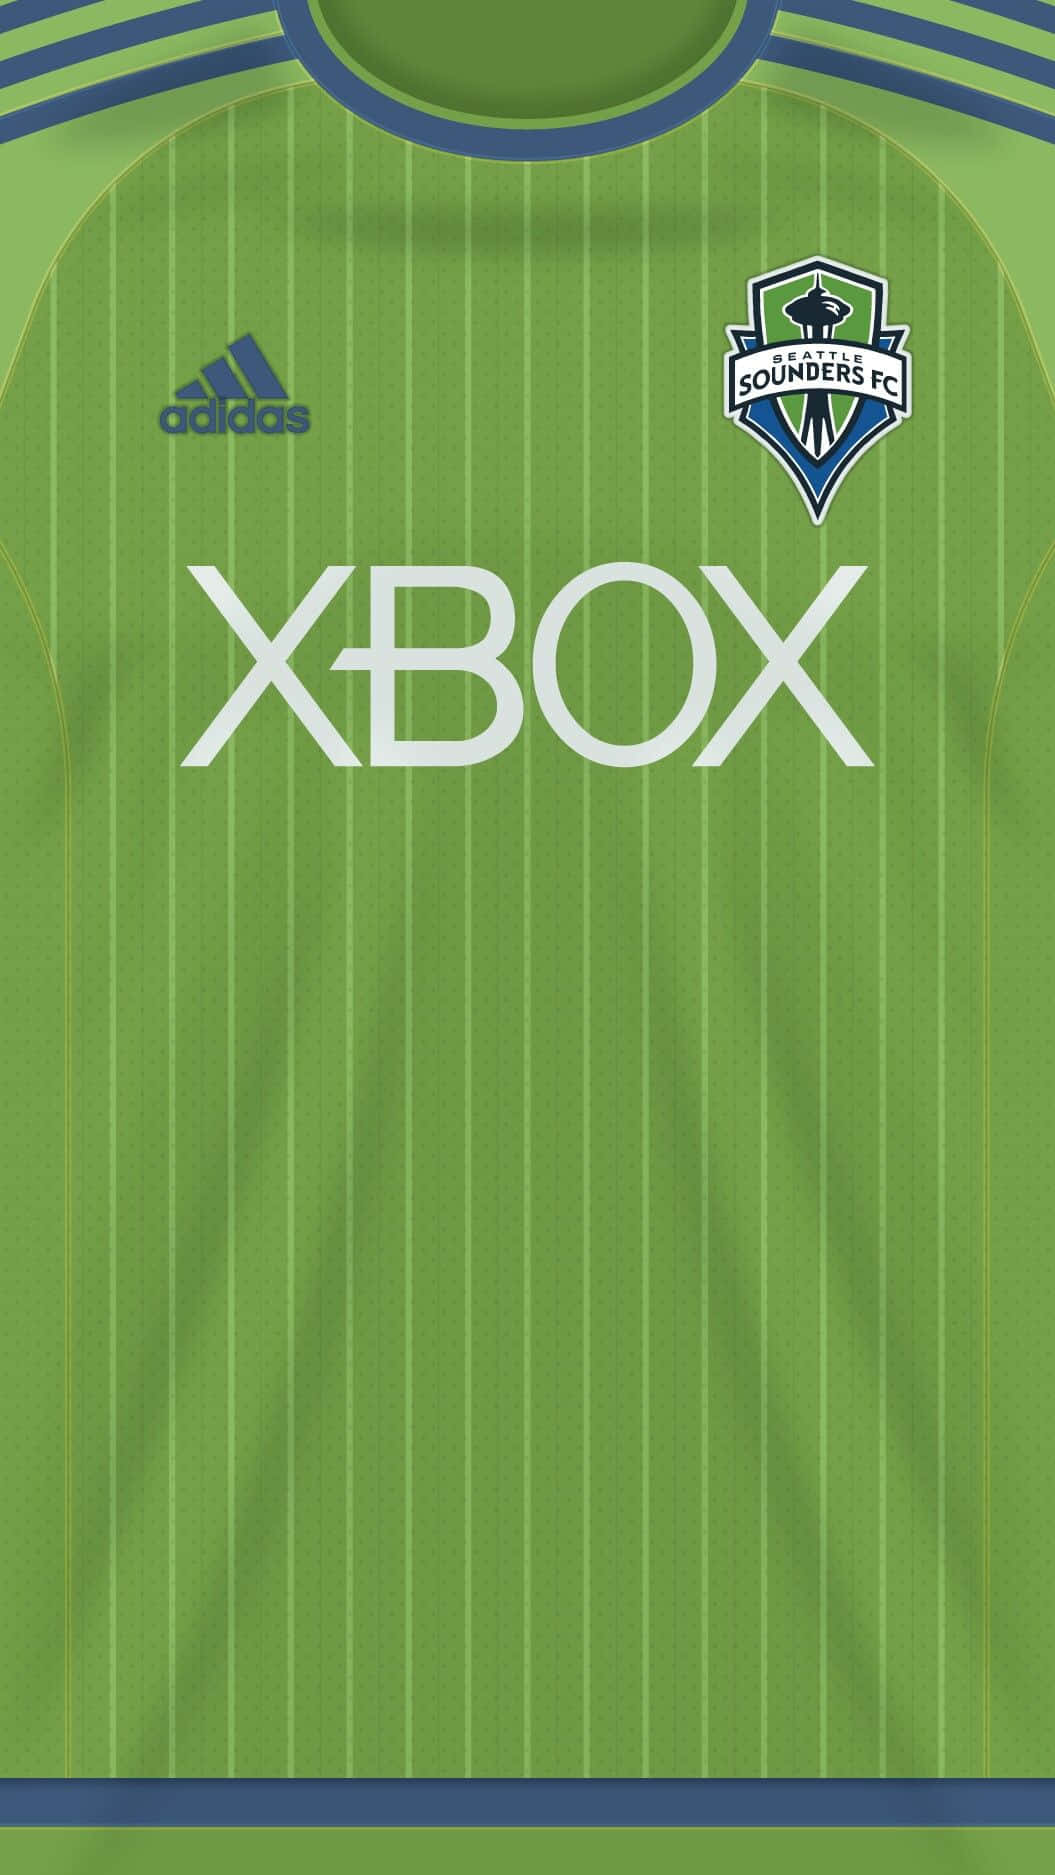 Seattlesounders Fc Adidas Xbox Trikot Wallpaper